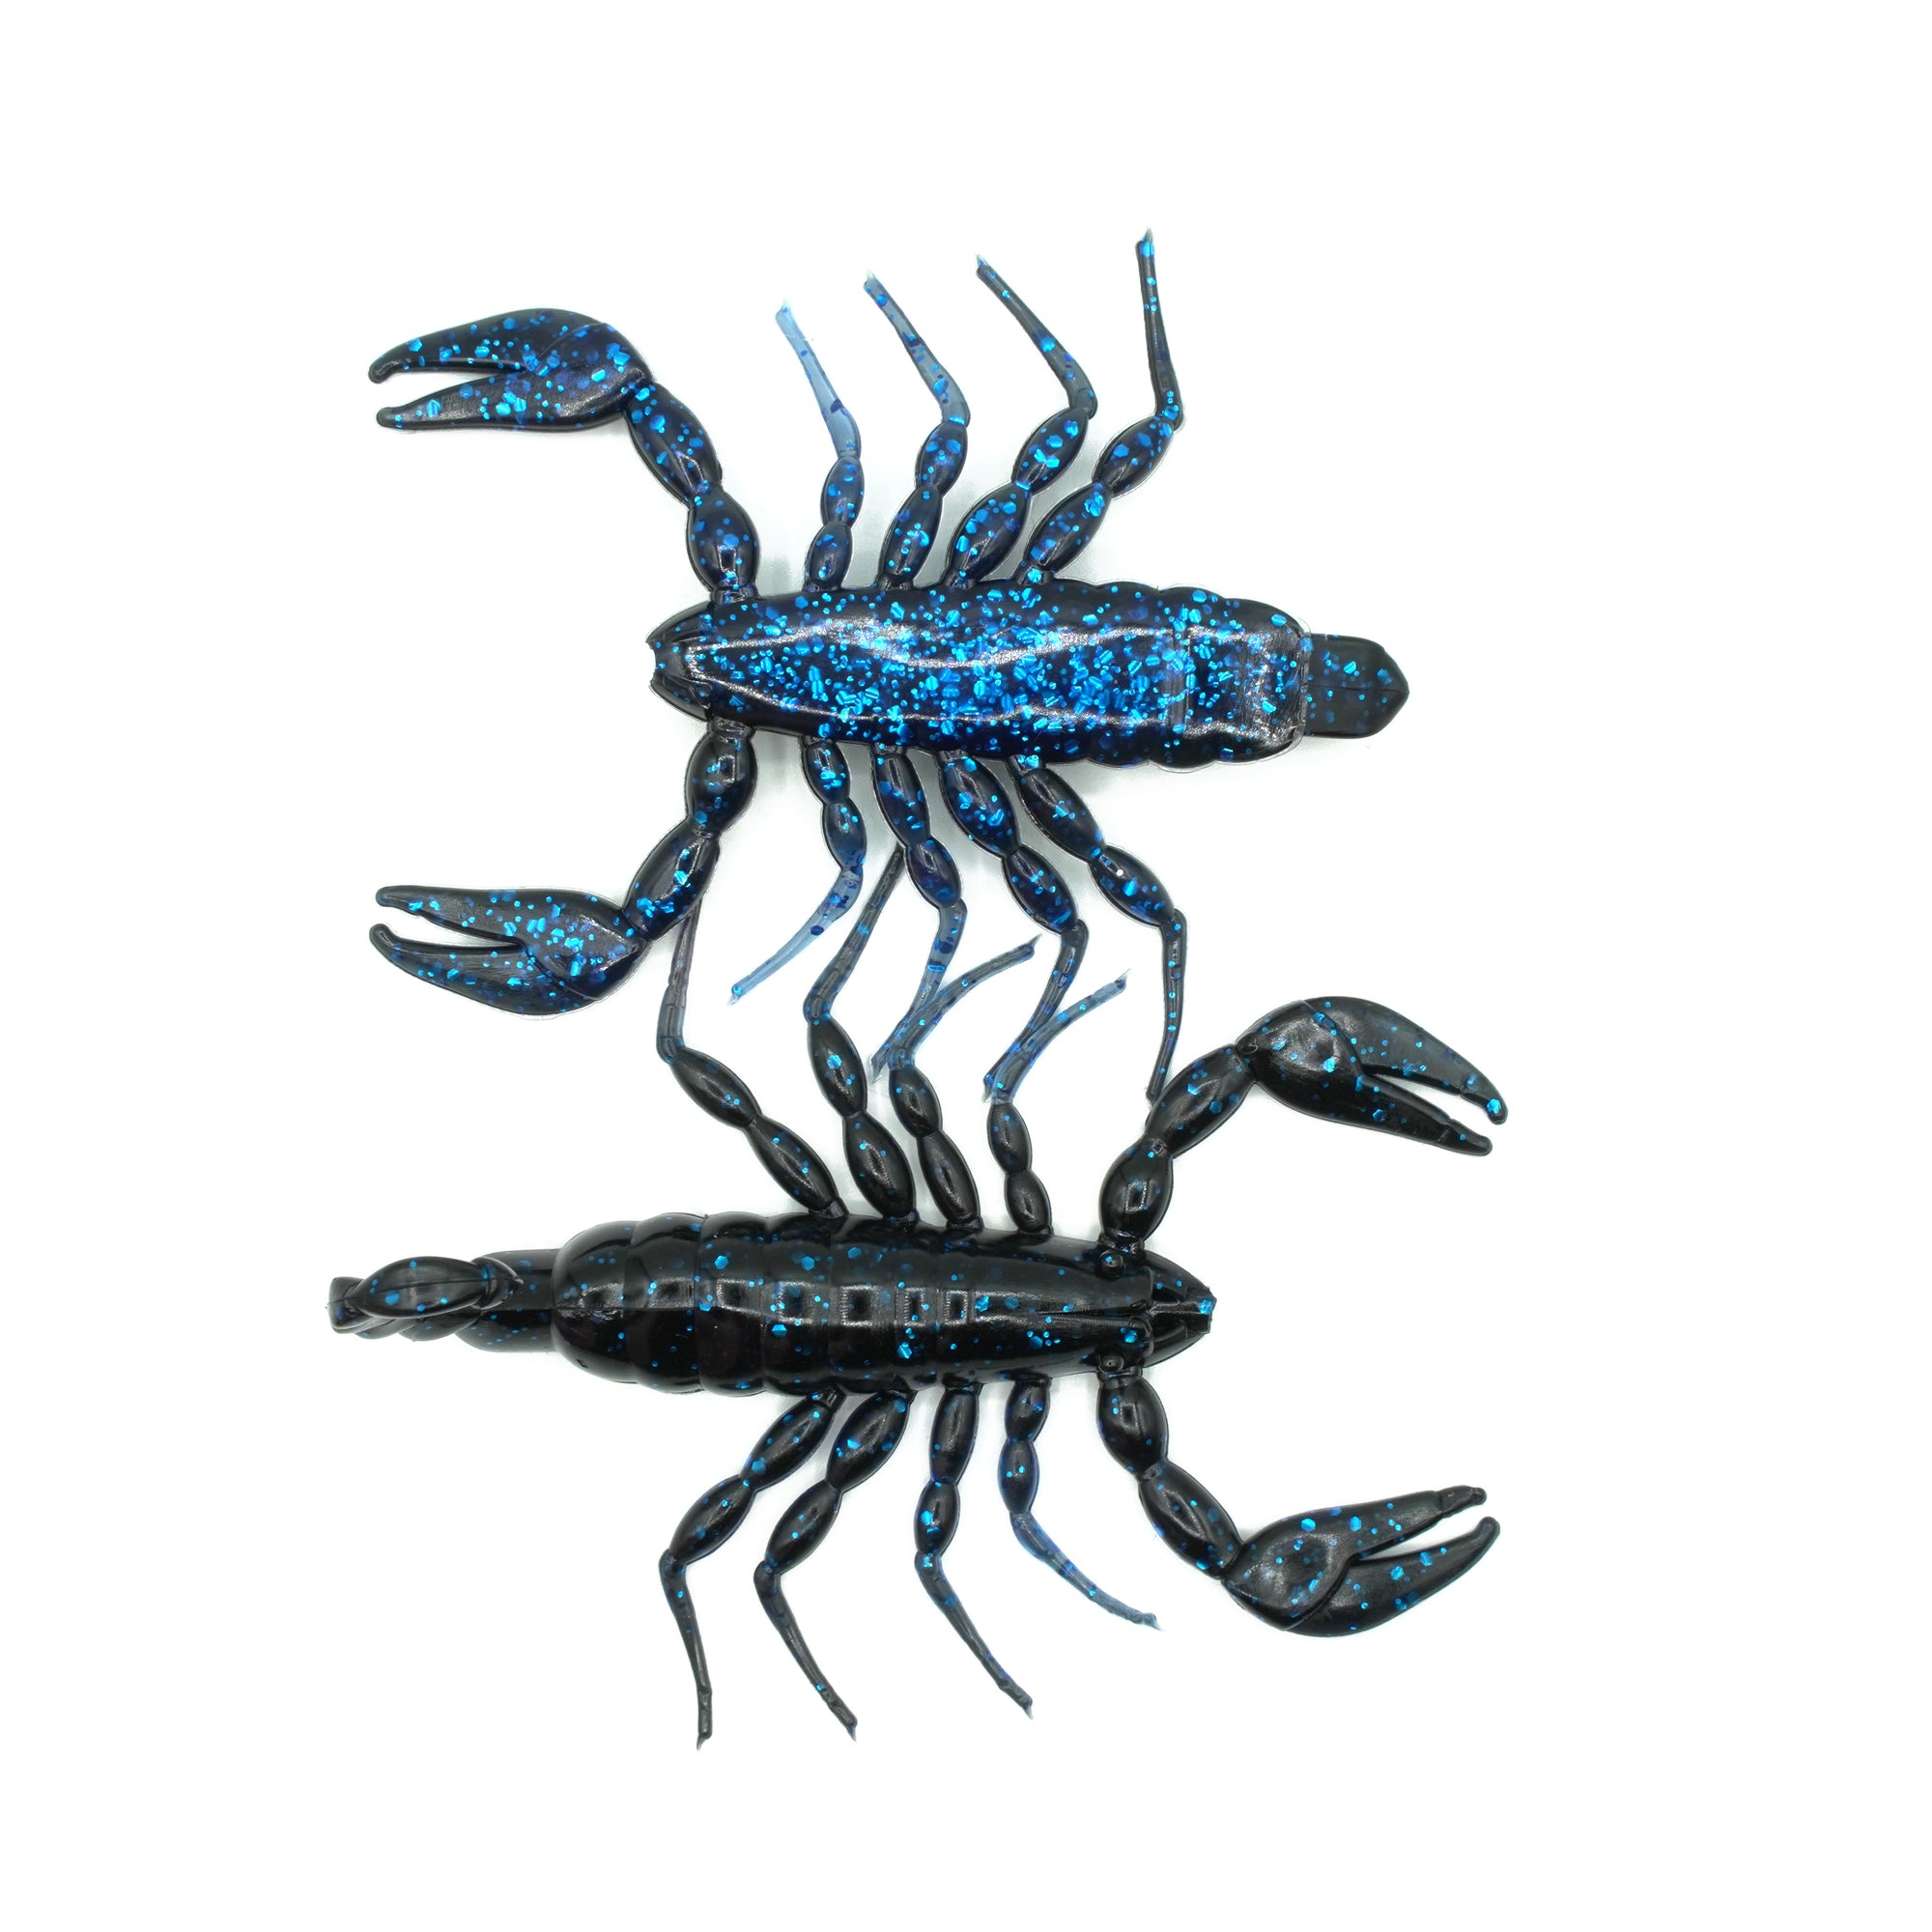 Scorpion Sampler Kit - Freshbaitz